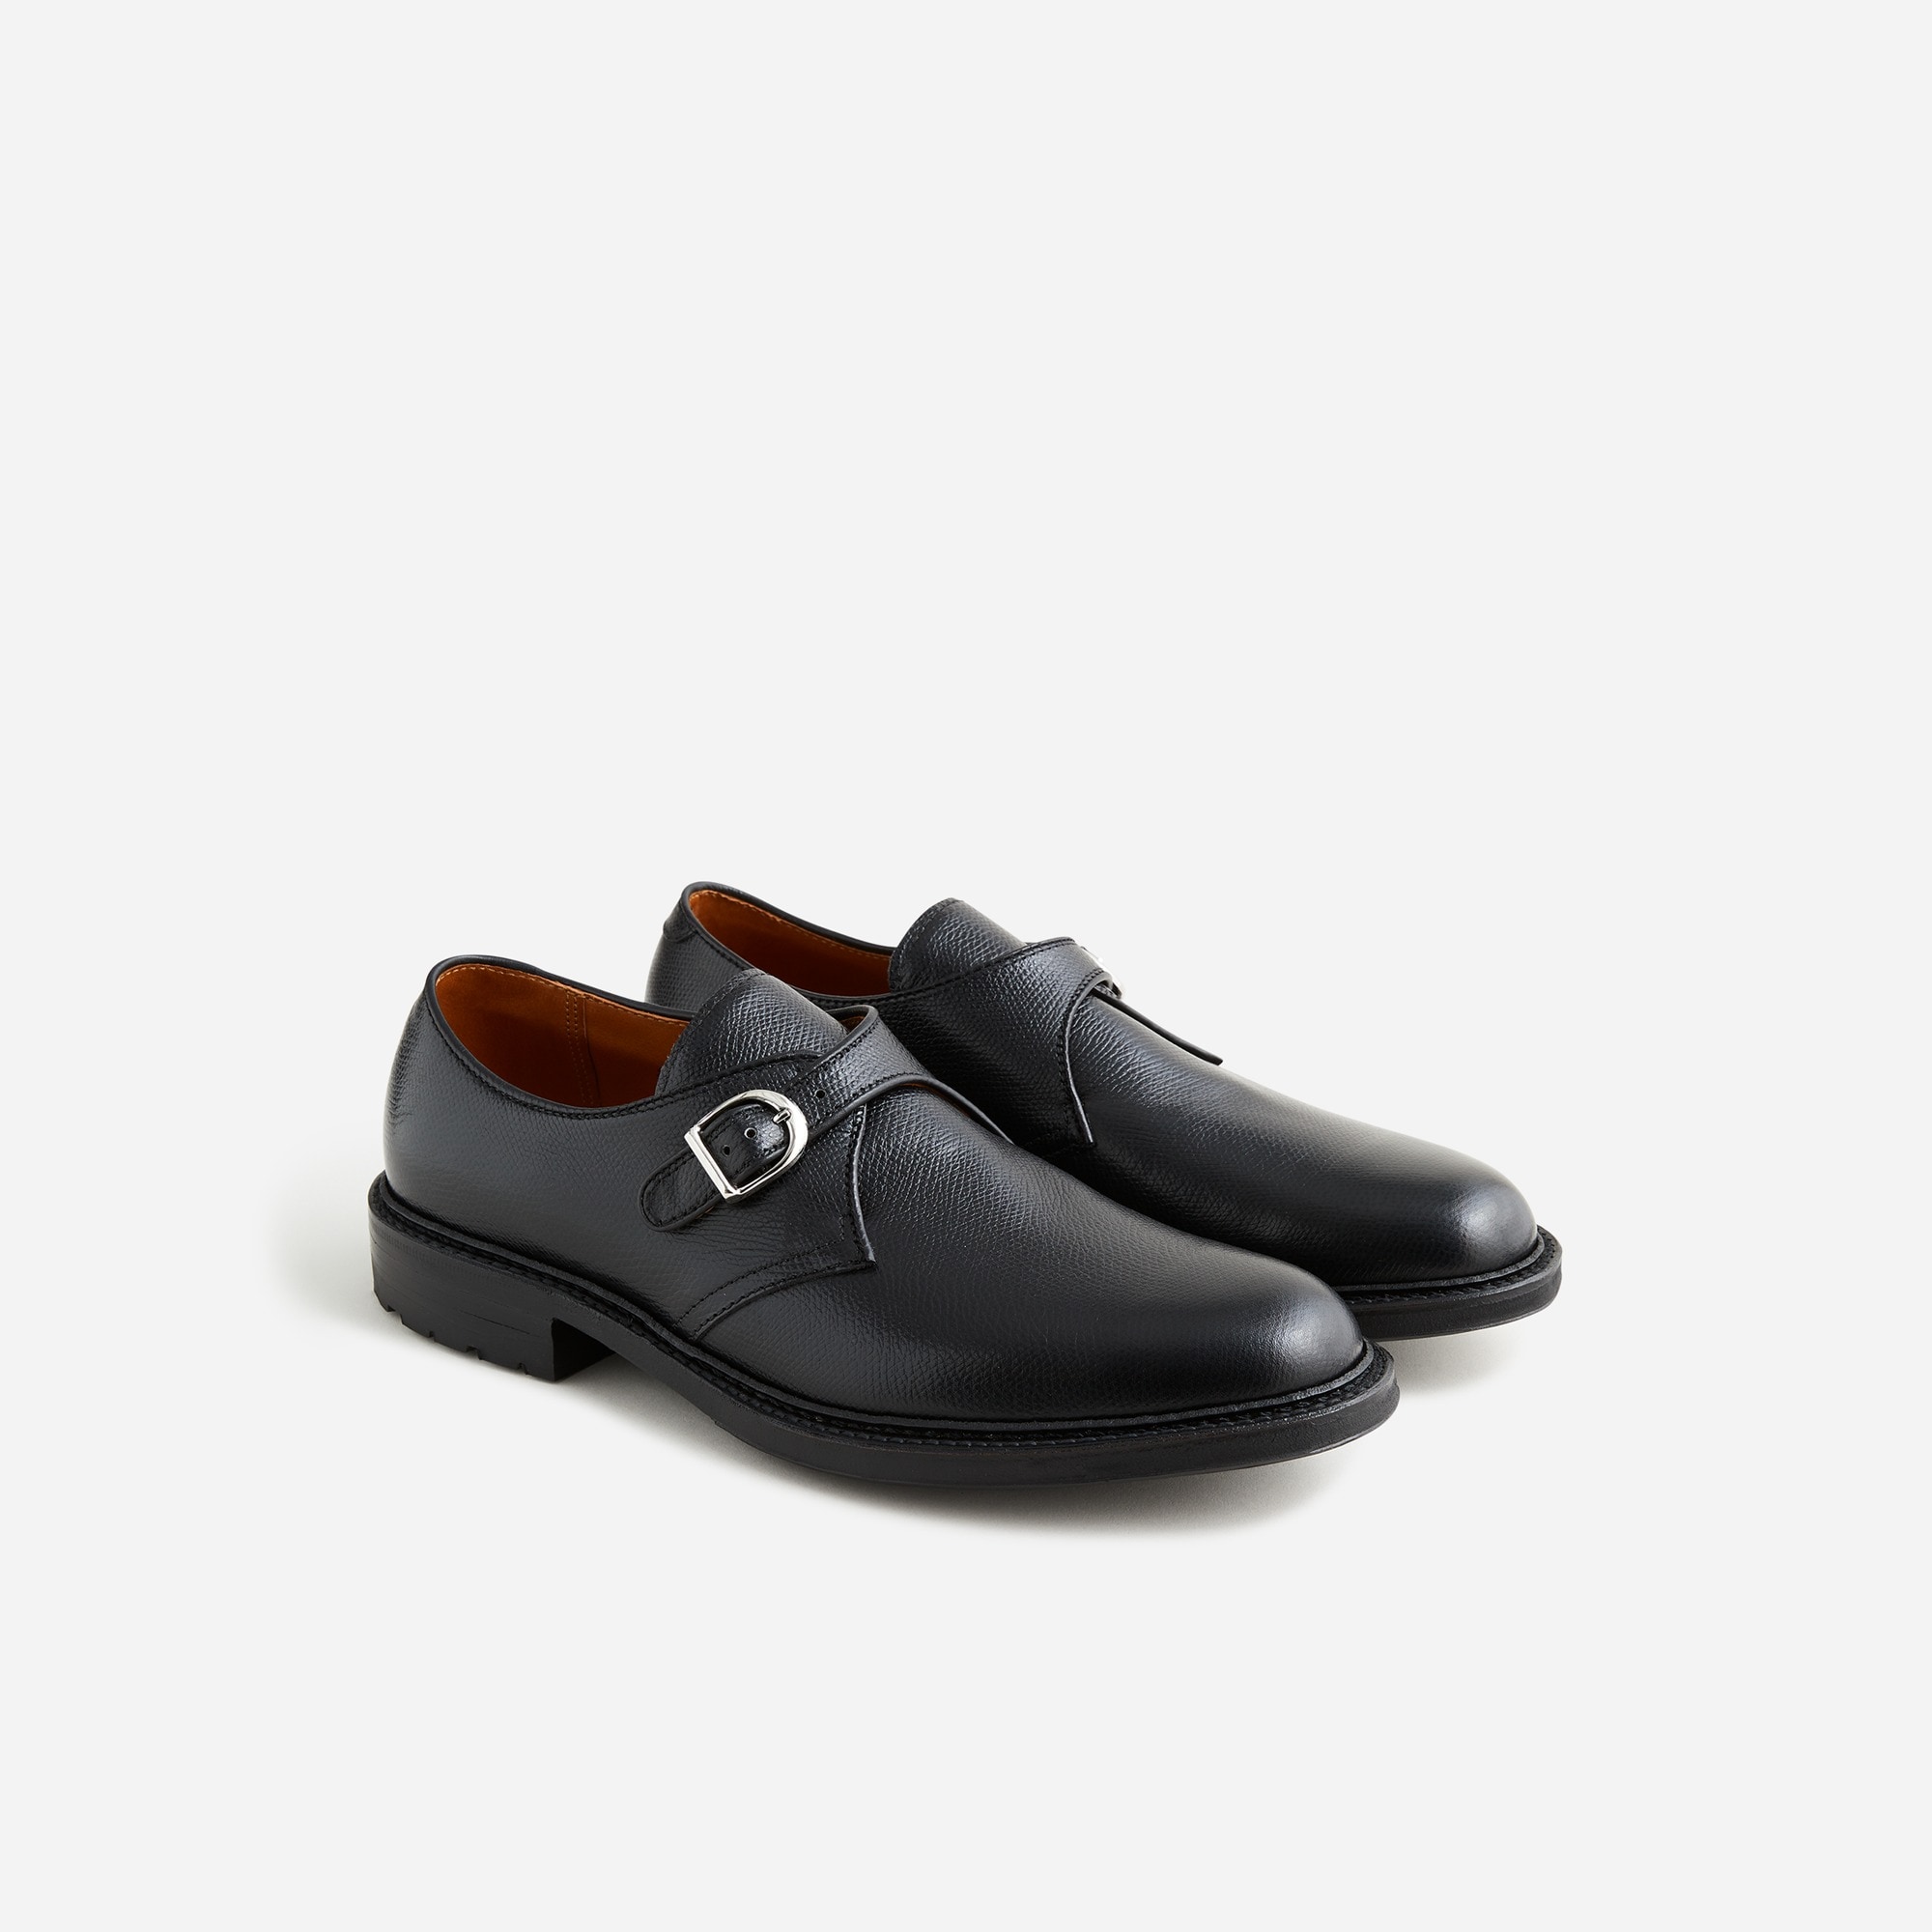  Alden® for J.Crew monk-strap dress shoes